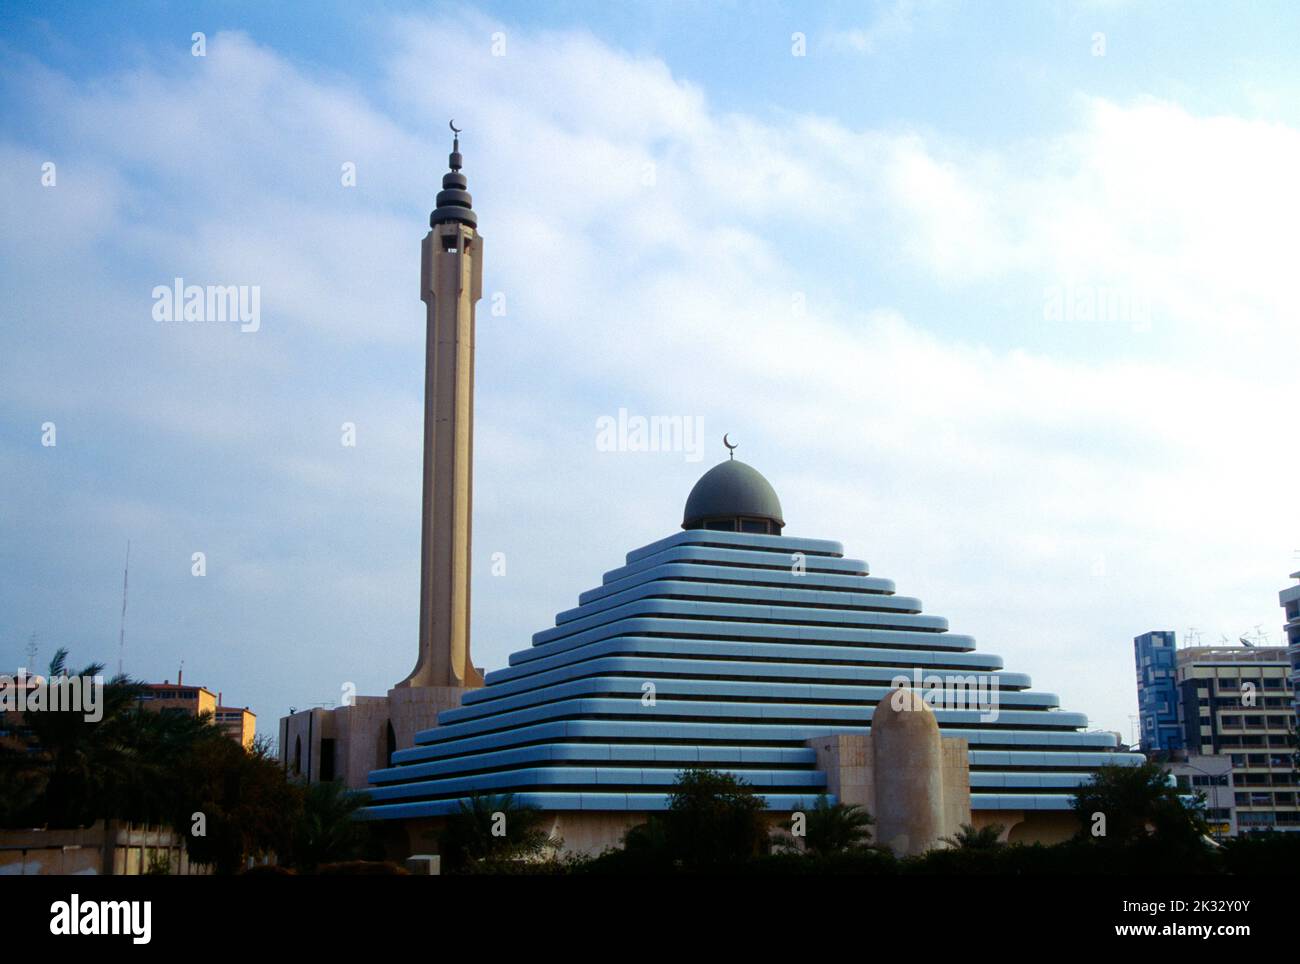 Ras Salmiya Kuwait City Kuwait Mohammed Nasser el Sabah Mosque (Pyramid Mosque) Built in the 1980's Stock Photo